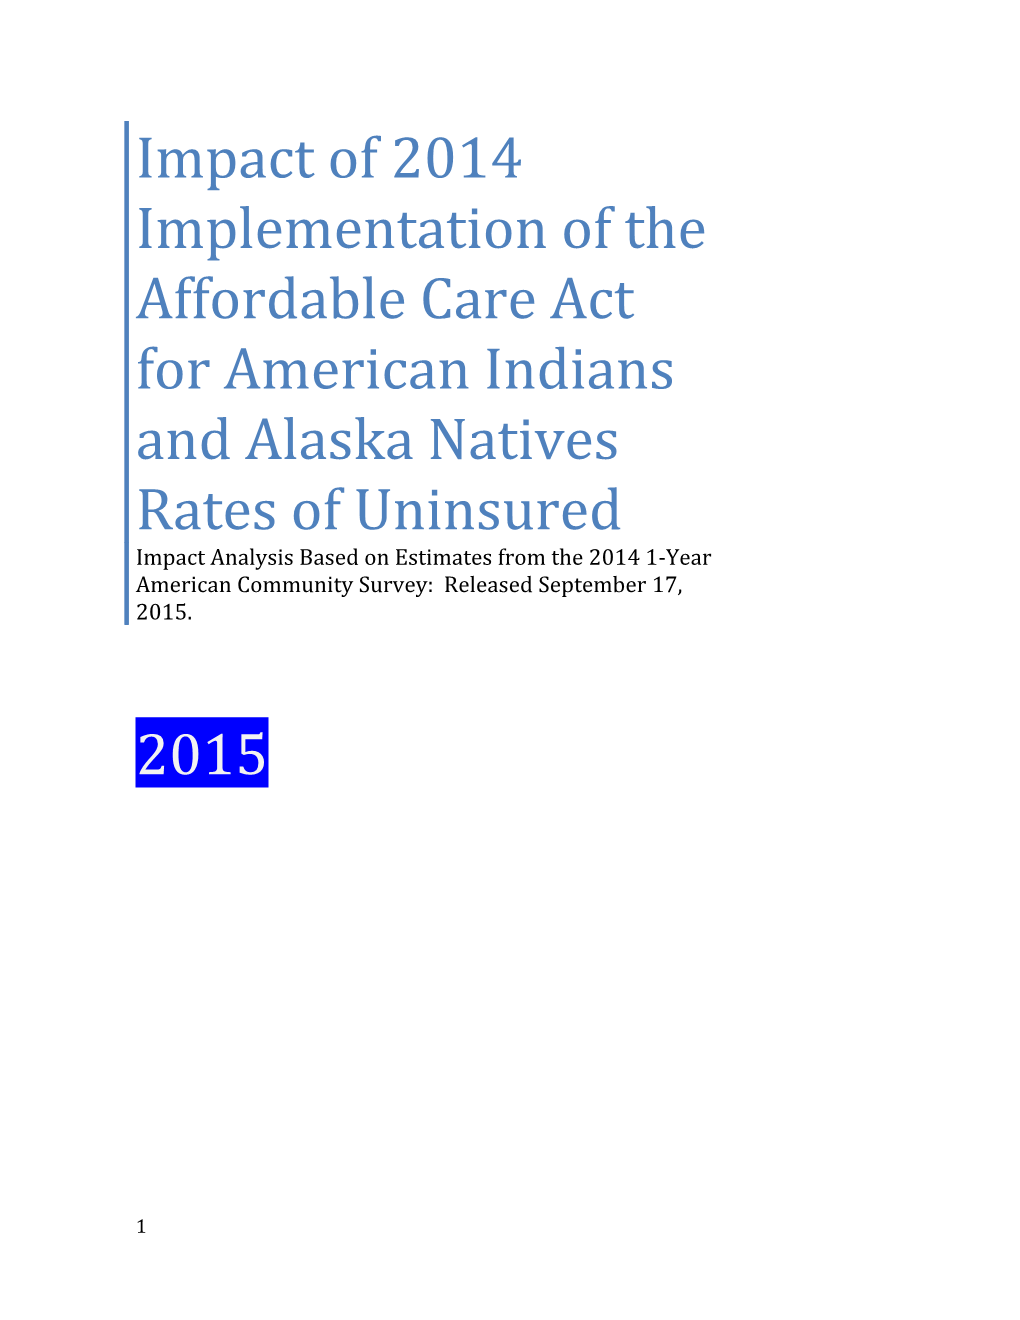 1-Year 2014 American Community Survey, September 17, 2015